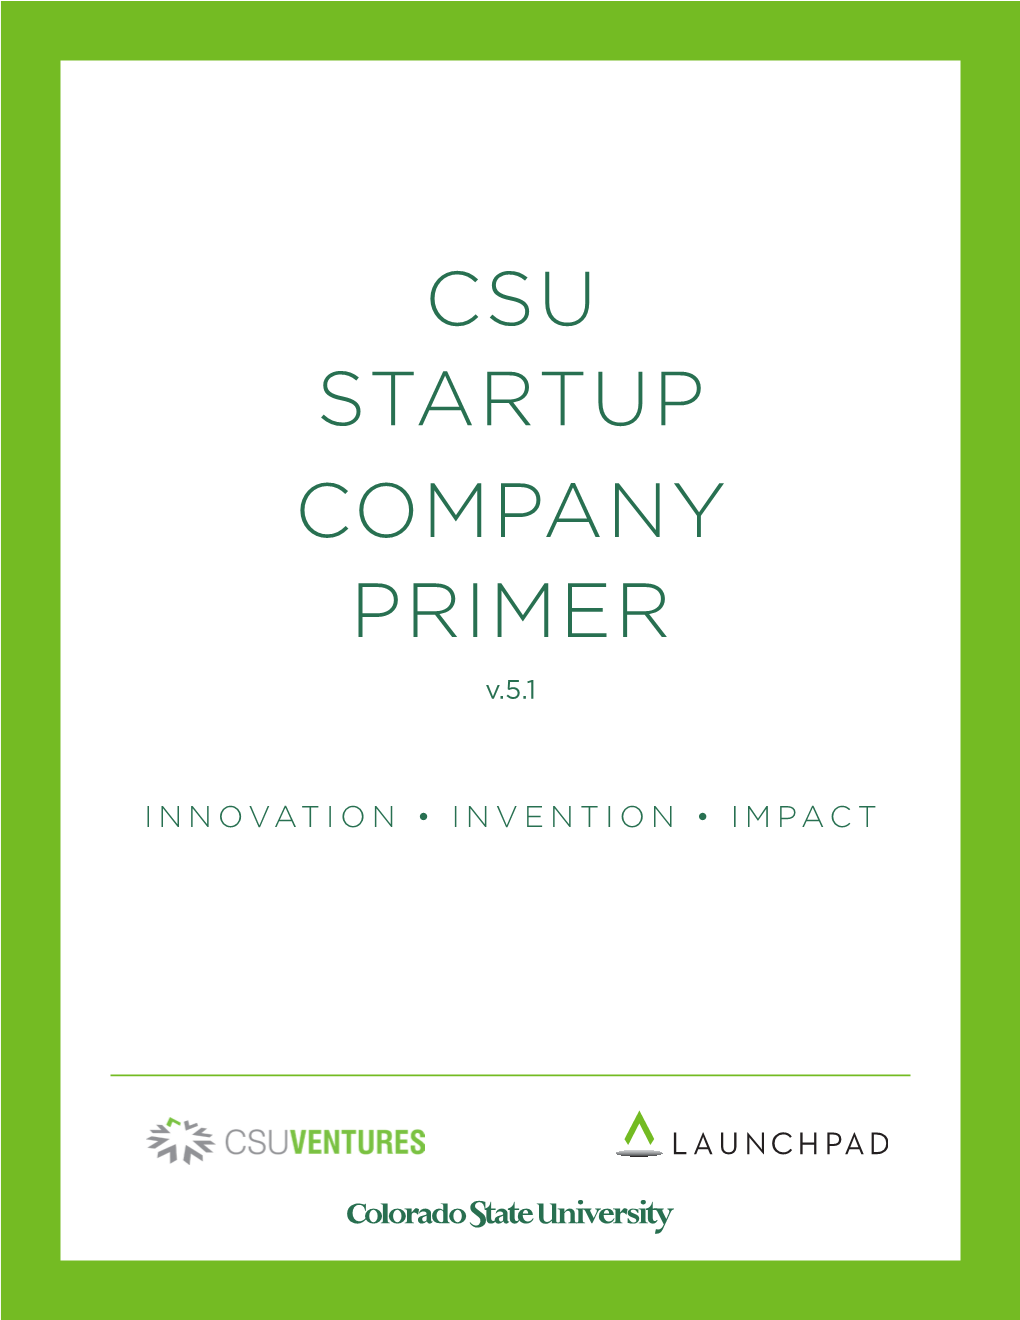 CSU STARTUP COMPANY PRIMER V.5.1